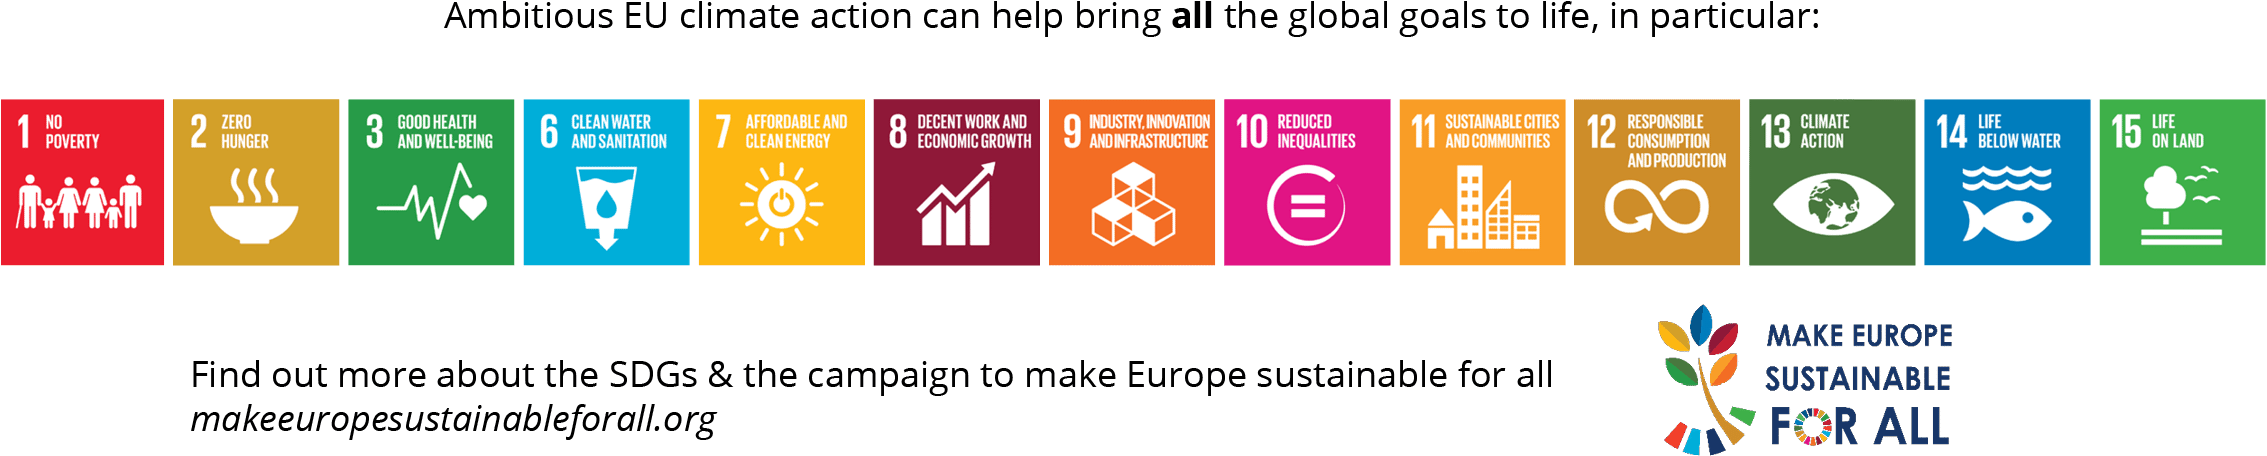 Sustainable Development Goals E U Climate Action PNG image